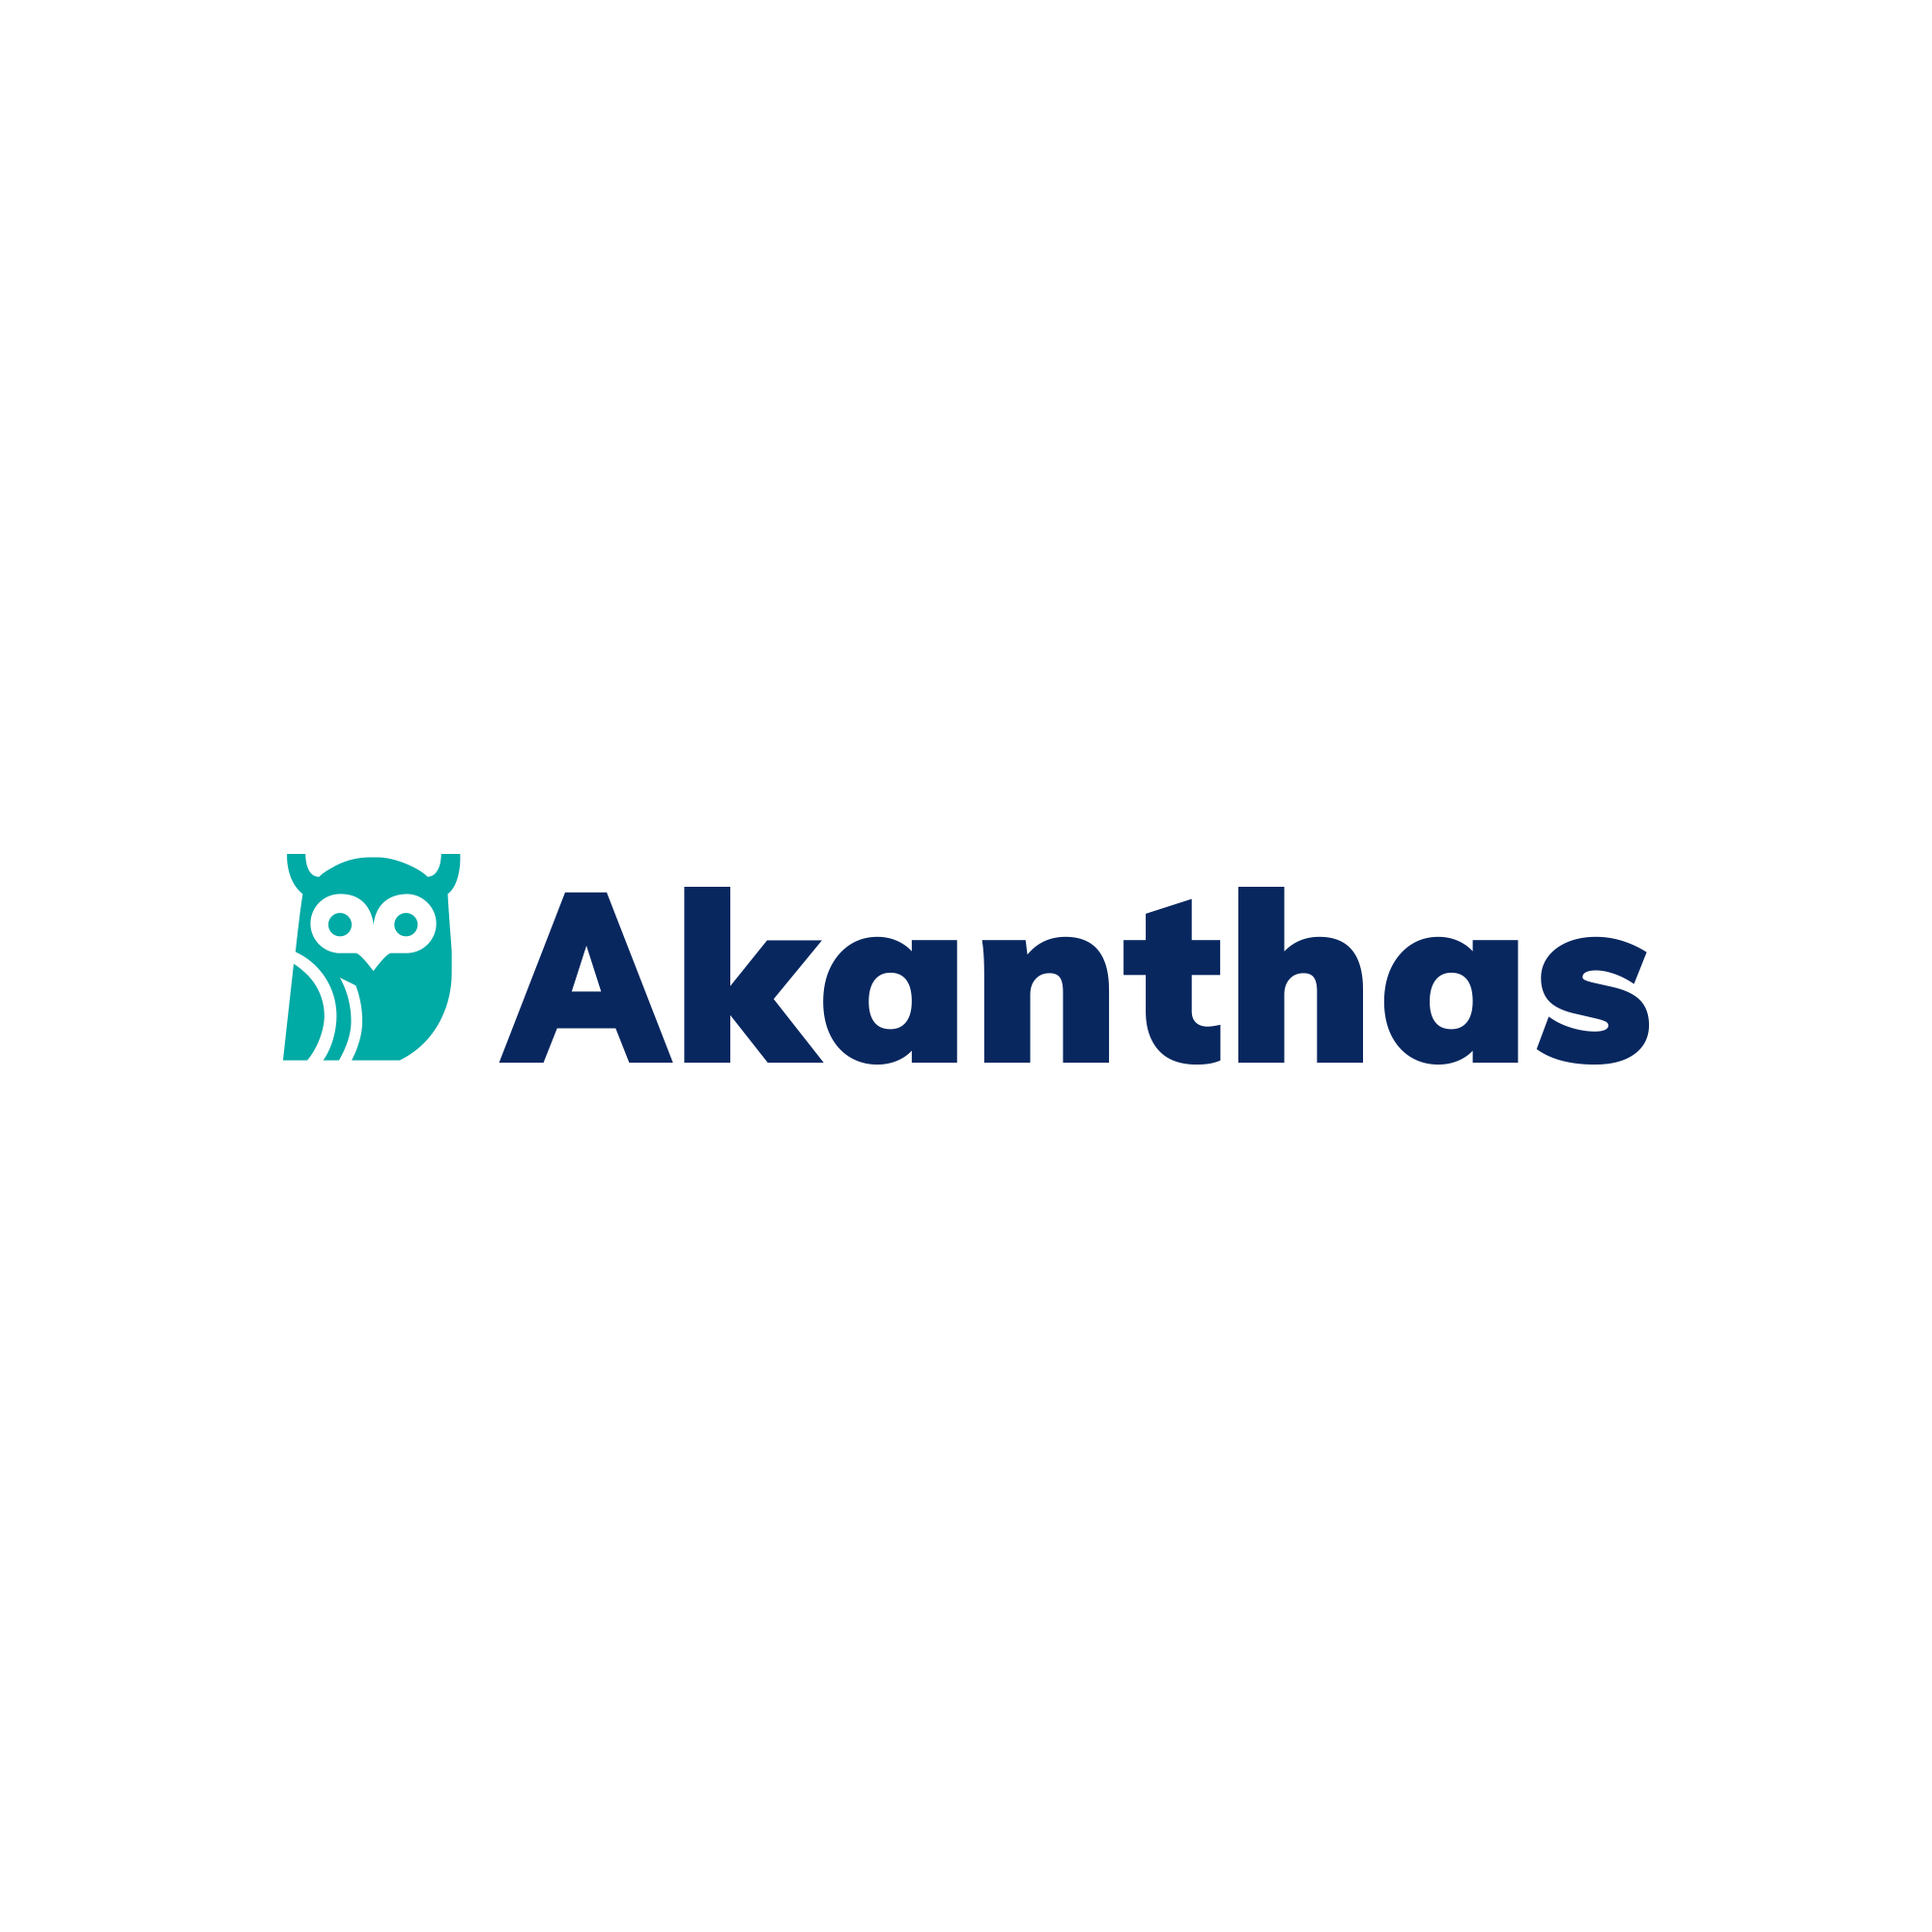 Akanthas